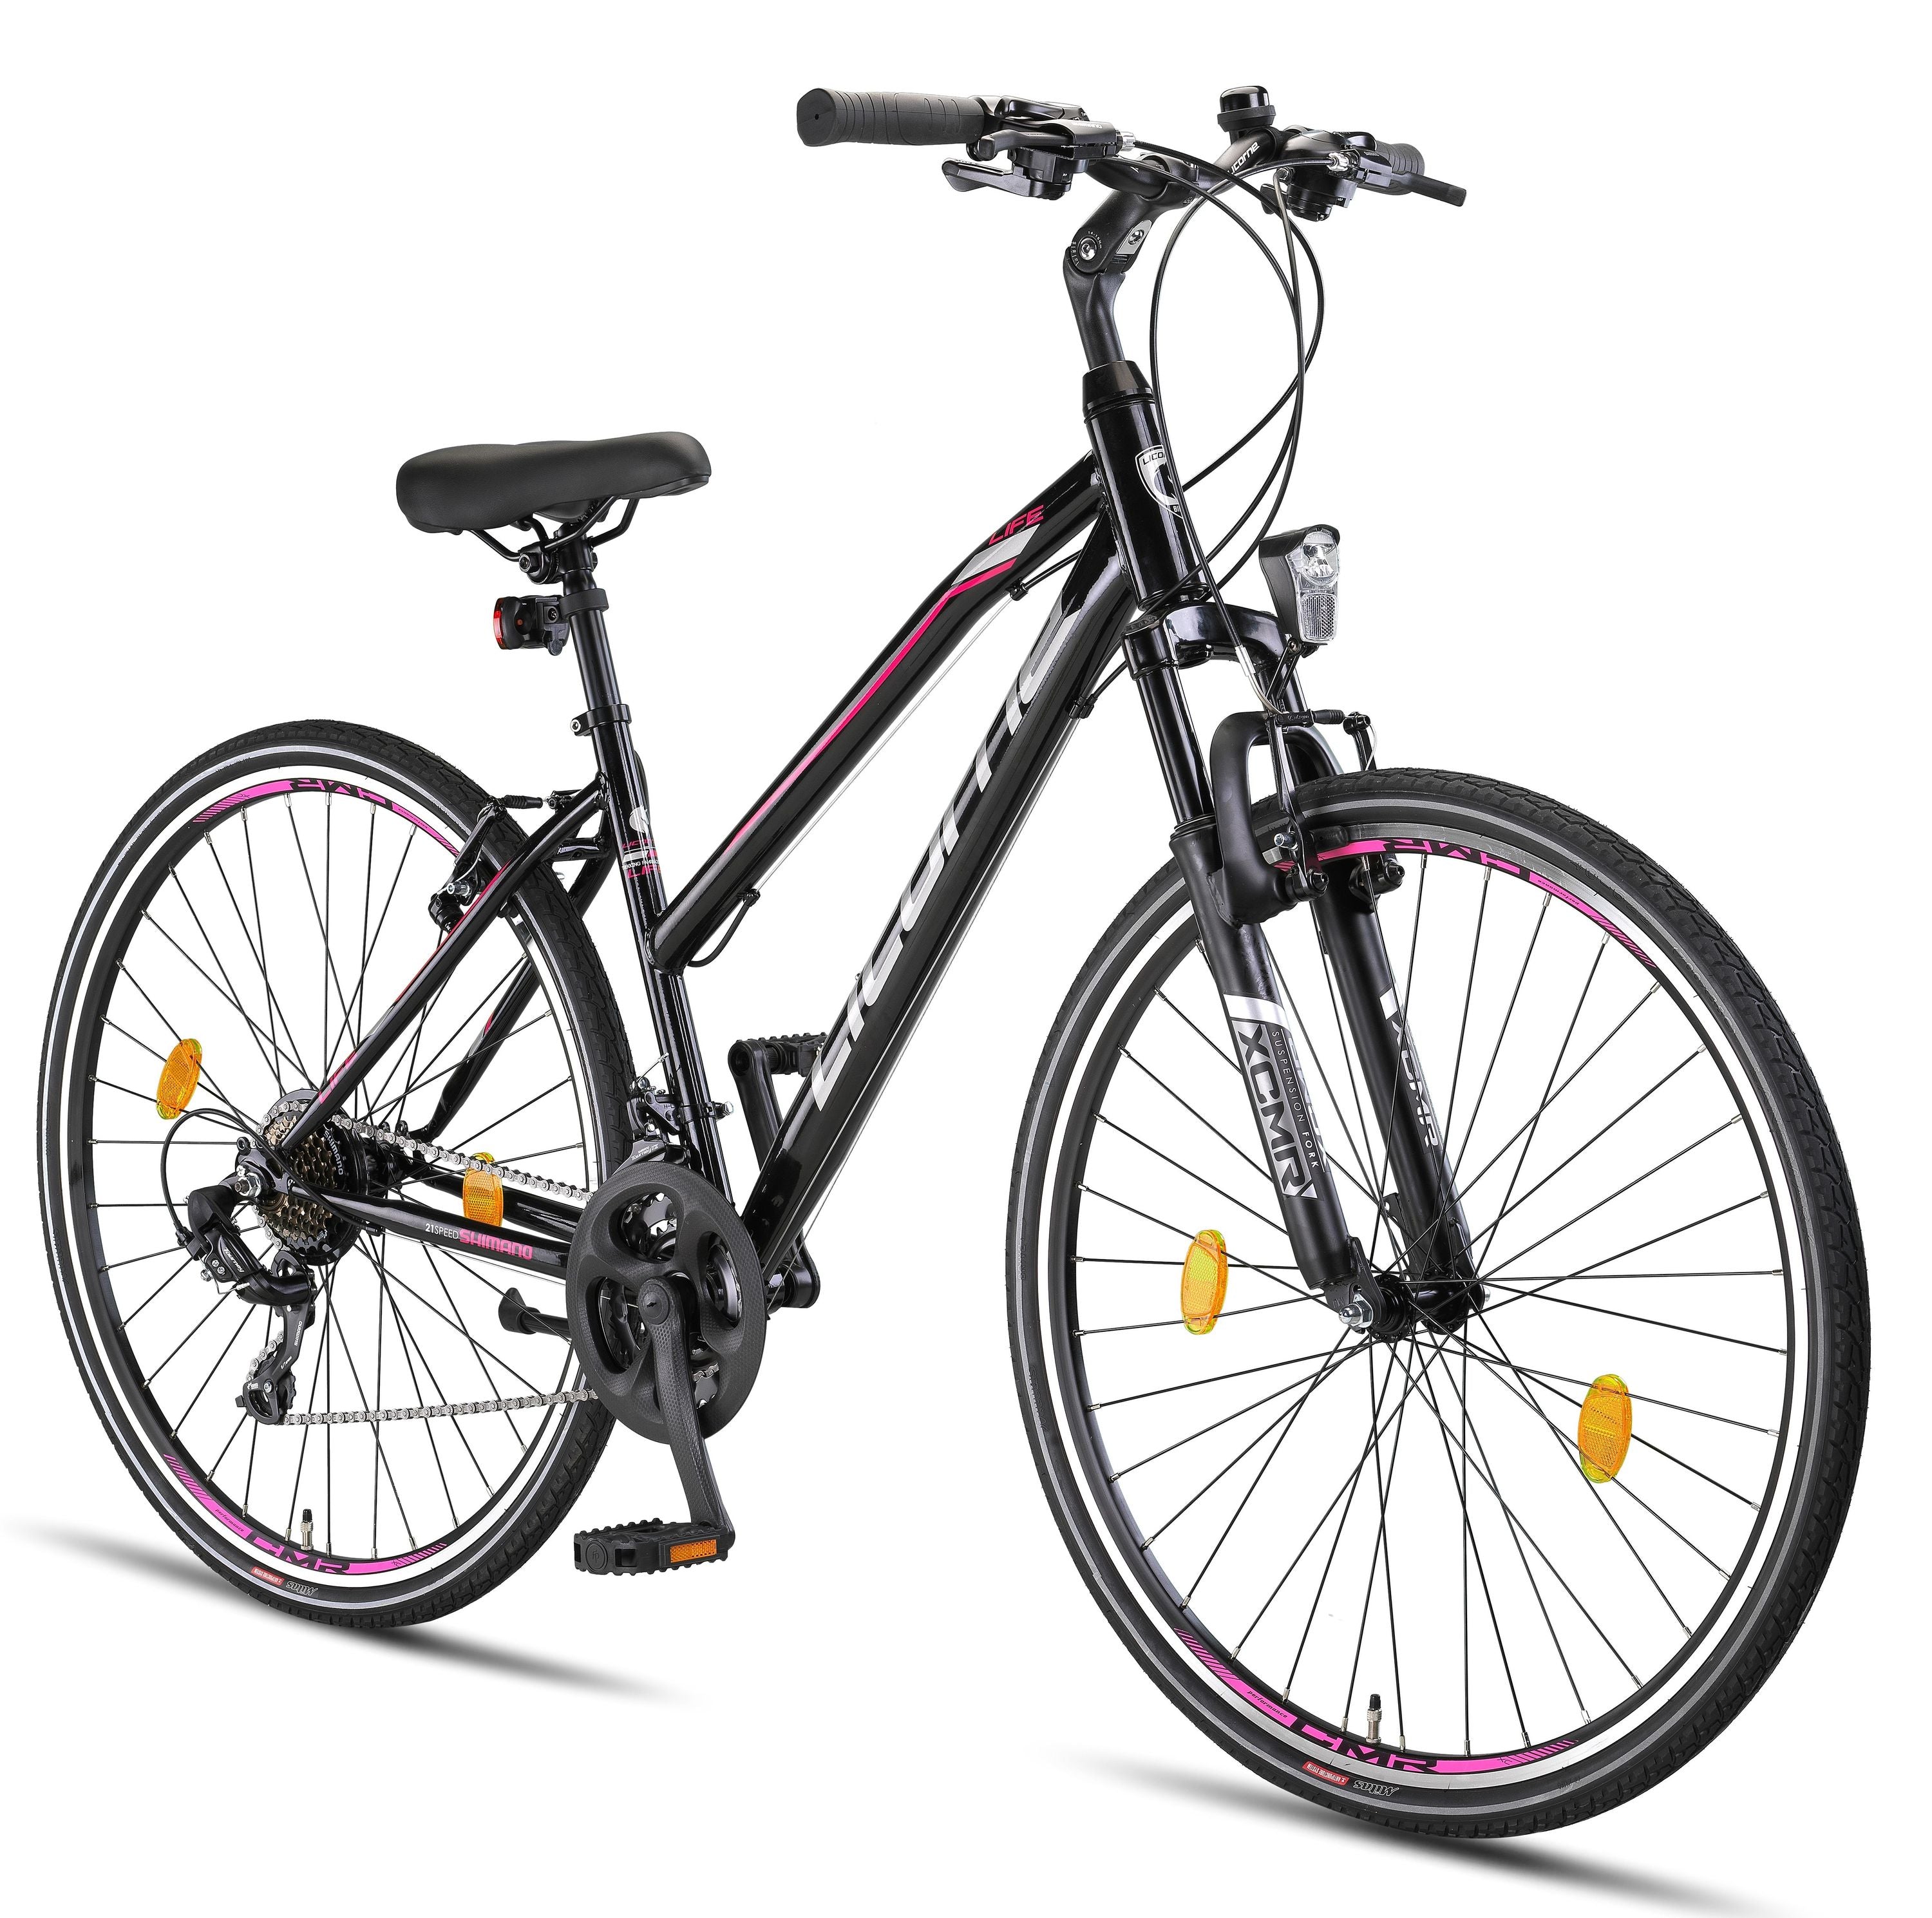 Licorne Bike Life-L-V Premium trekking bike in 28 inch - bike for boys, girls, ladies and men - Shimano 21 speed gears - mountain bike - cross bike